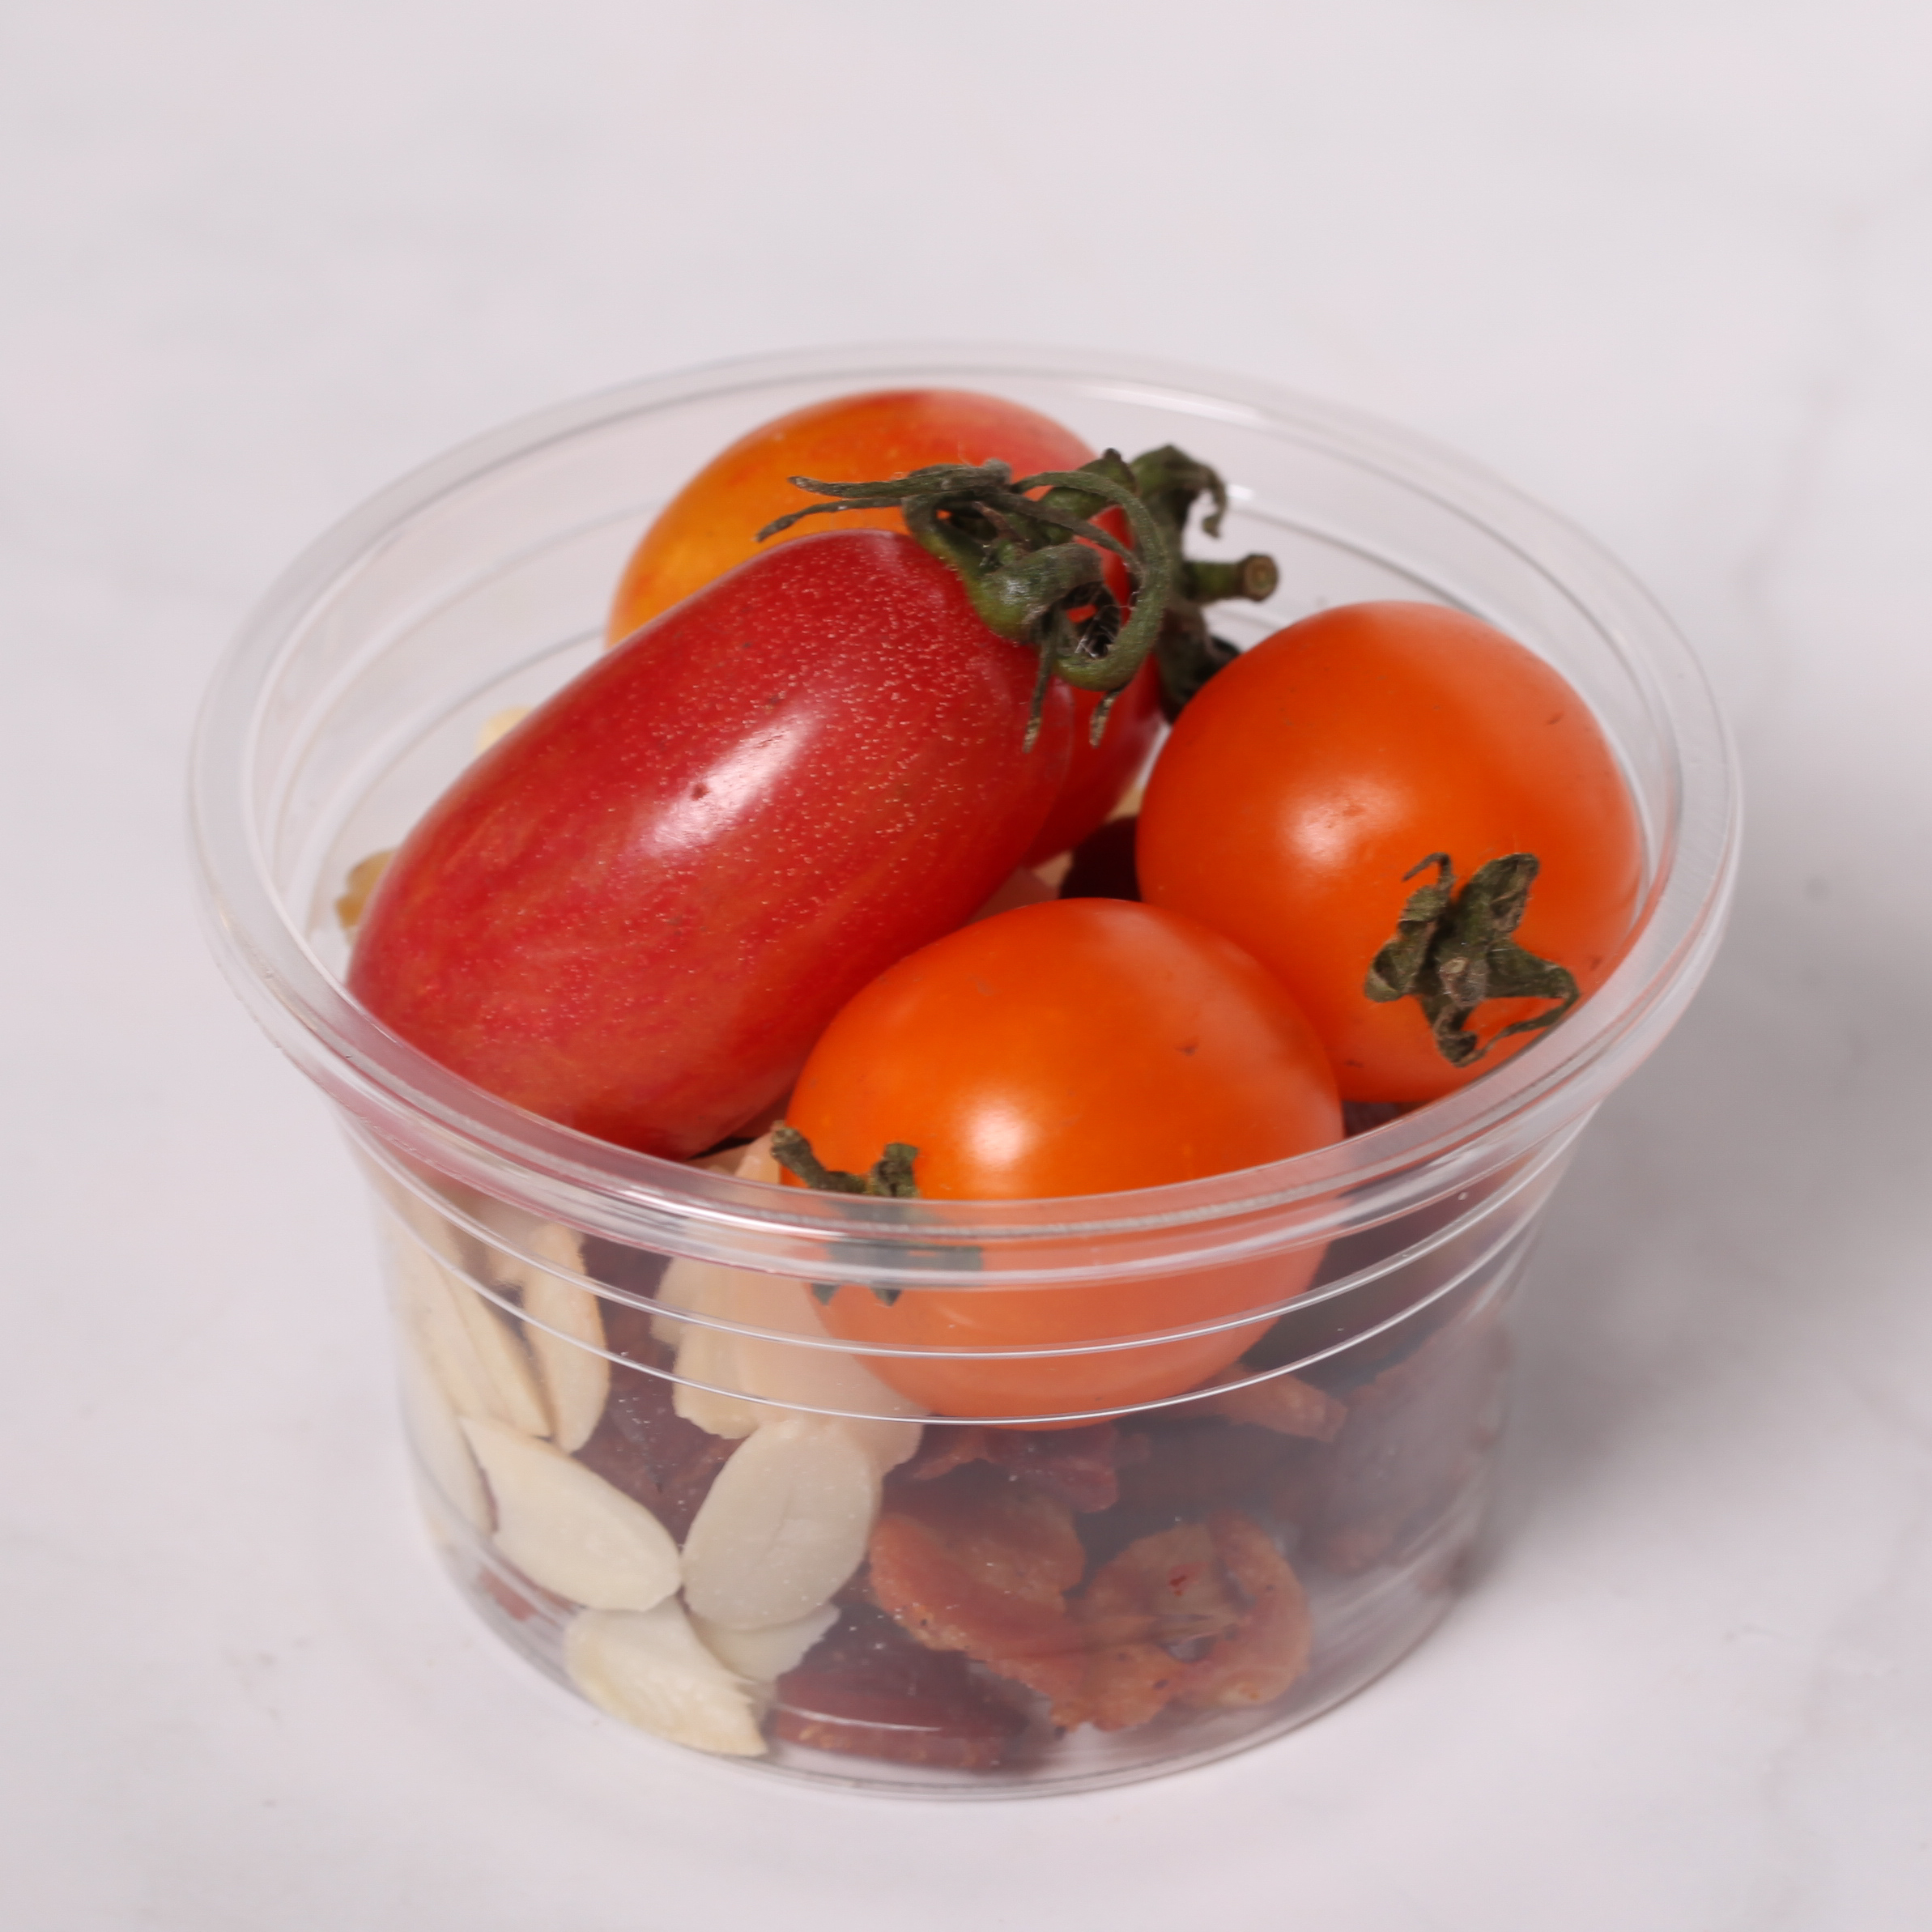 Salad Topper: Bacon Bits, Cherry Tomato & Almond